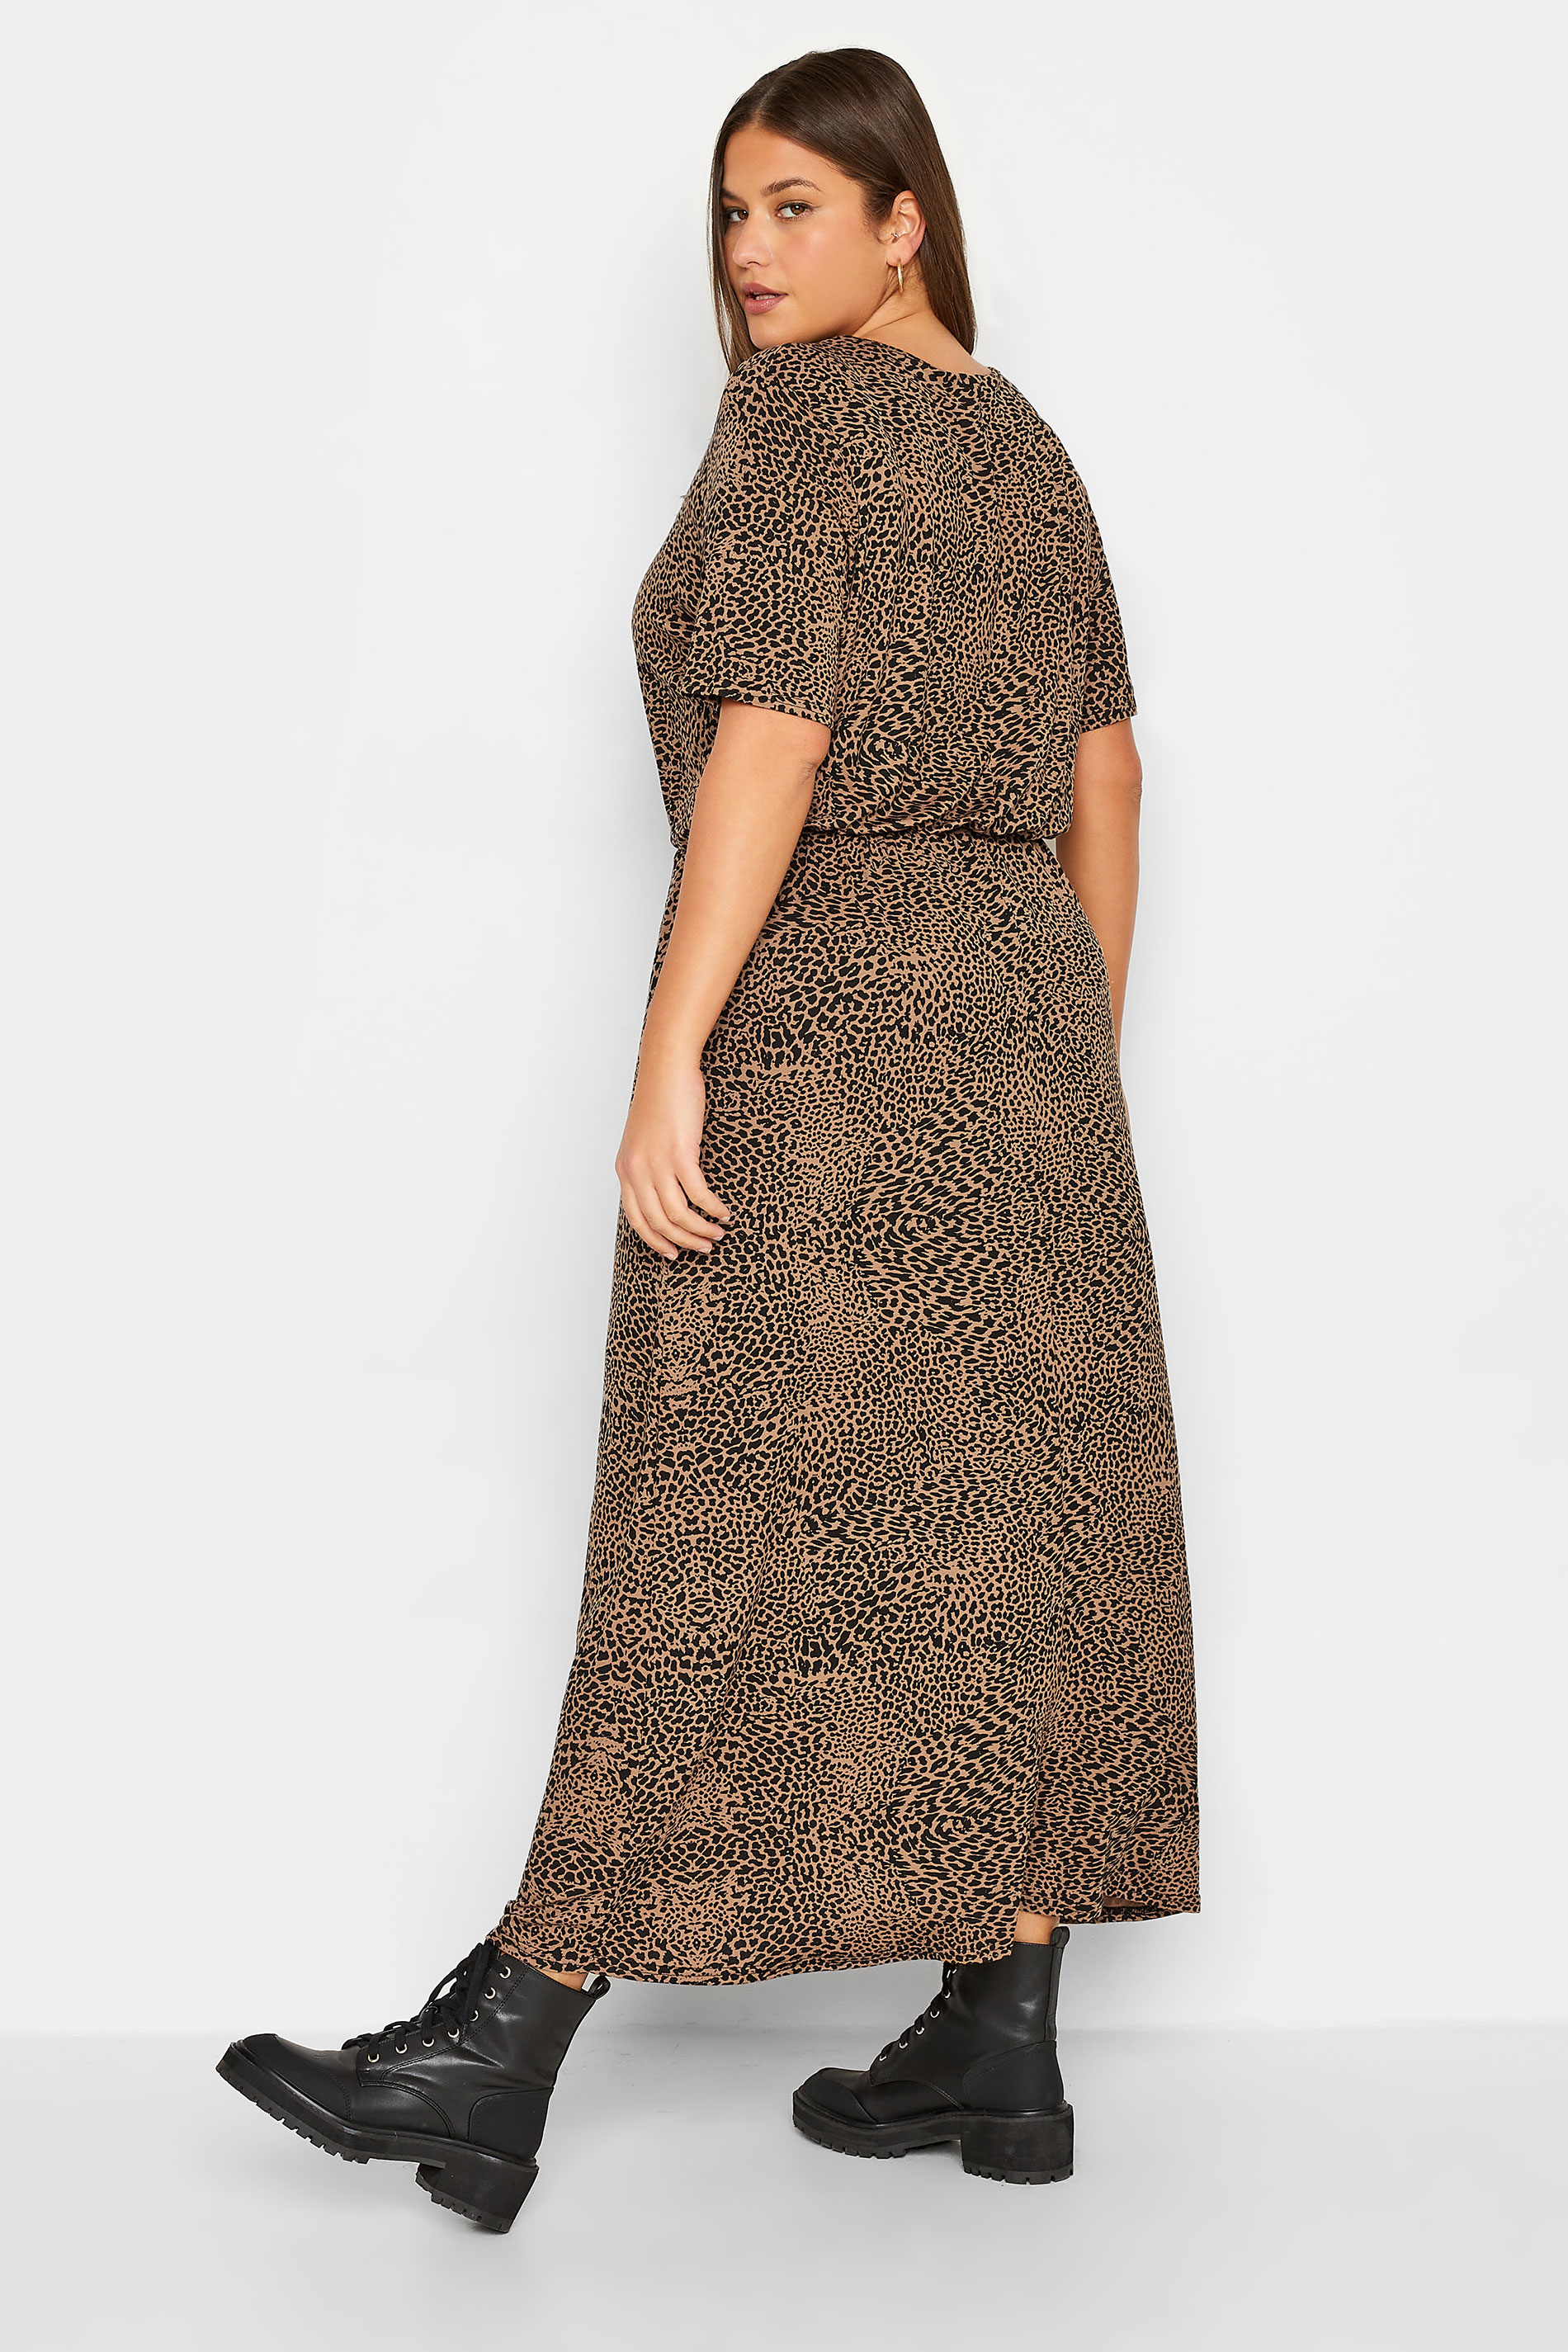 LTS Tall Women's Brown Leopard Print Pocket Midaxi Dress | Long Tall Sally 3